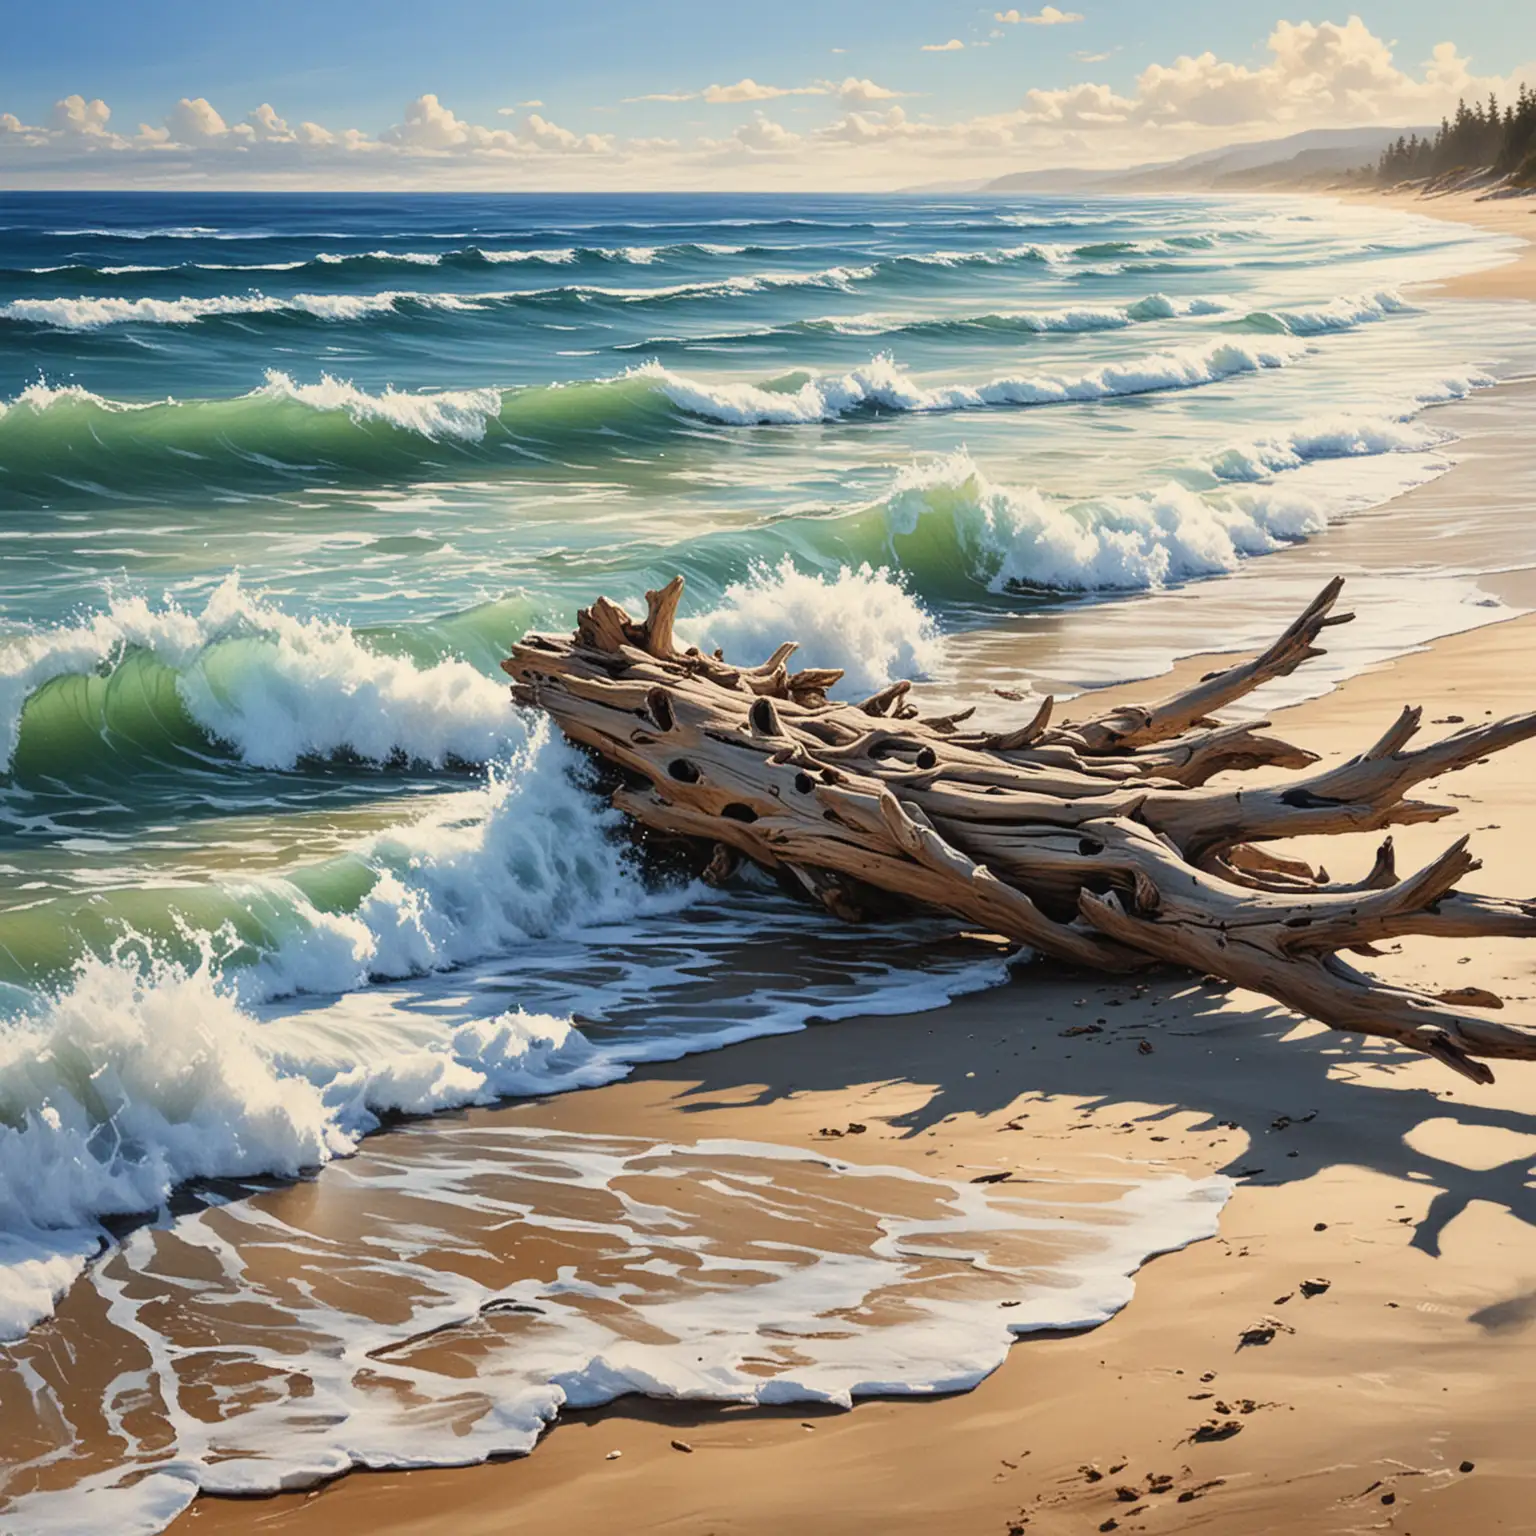 Seaside Serenity Driftwood Art on Sandy Beach with Rolling Blue Ocean Waves